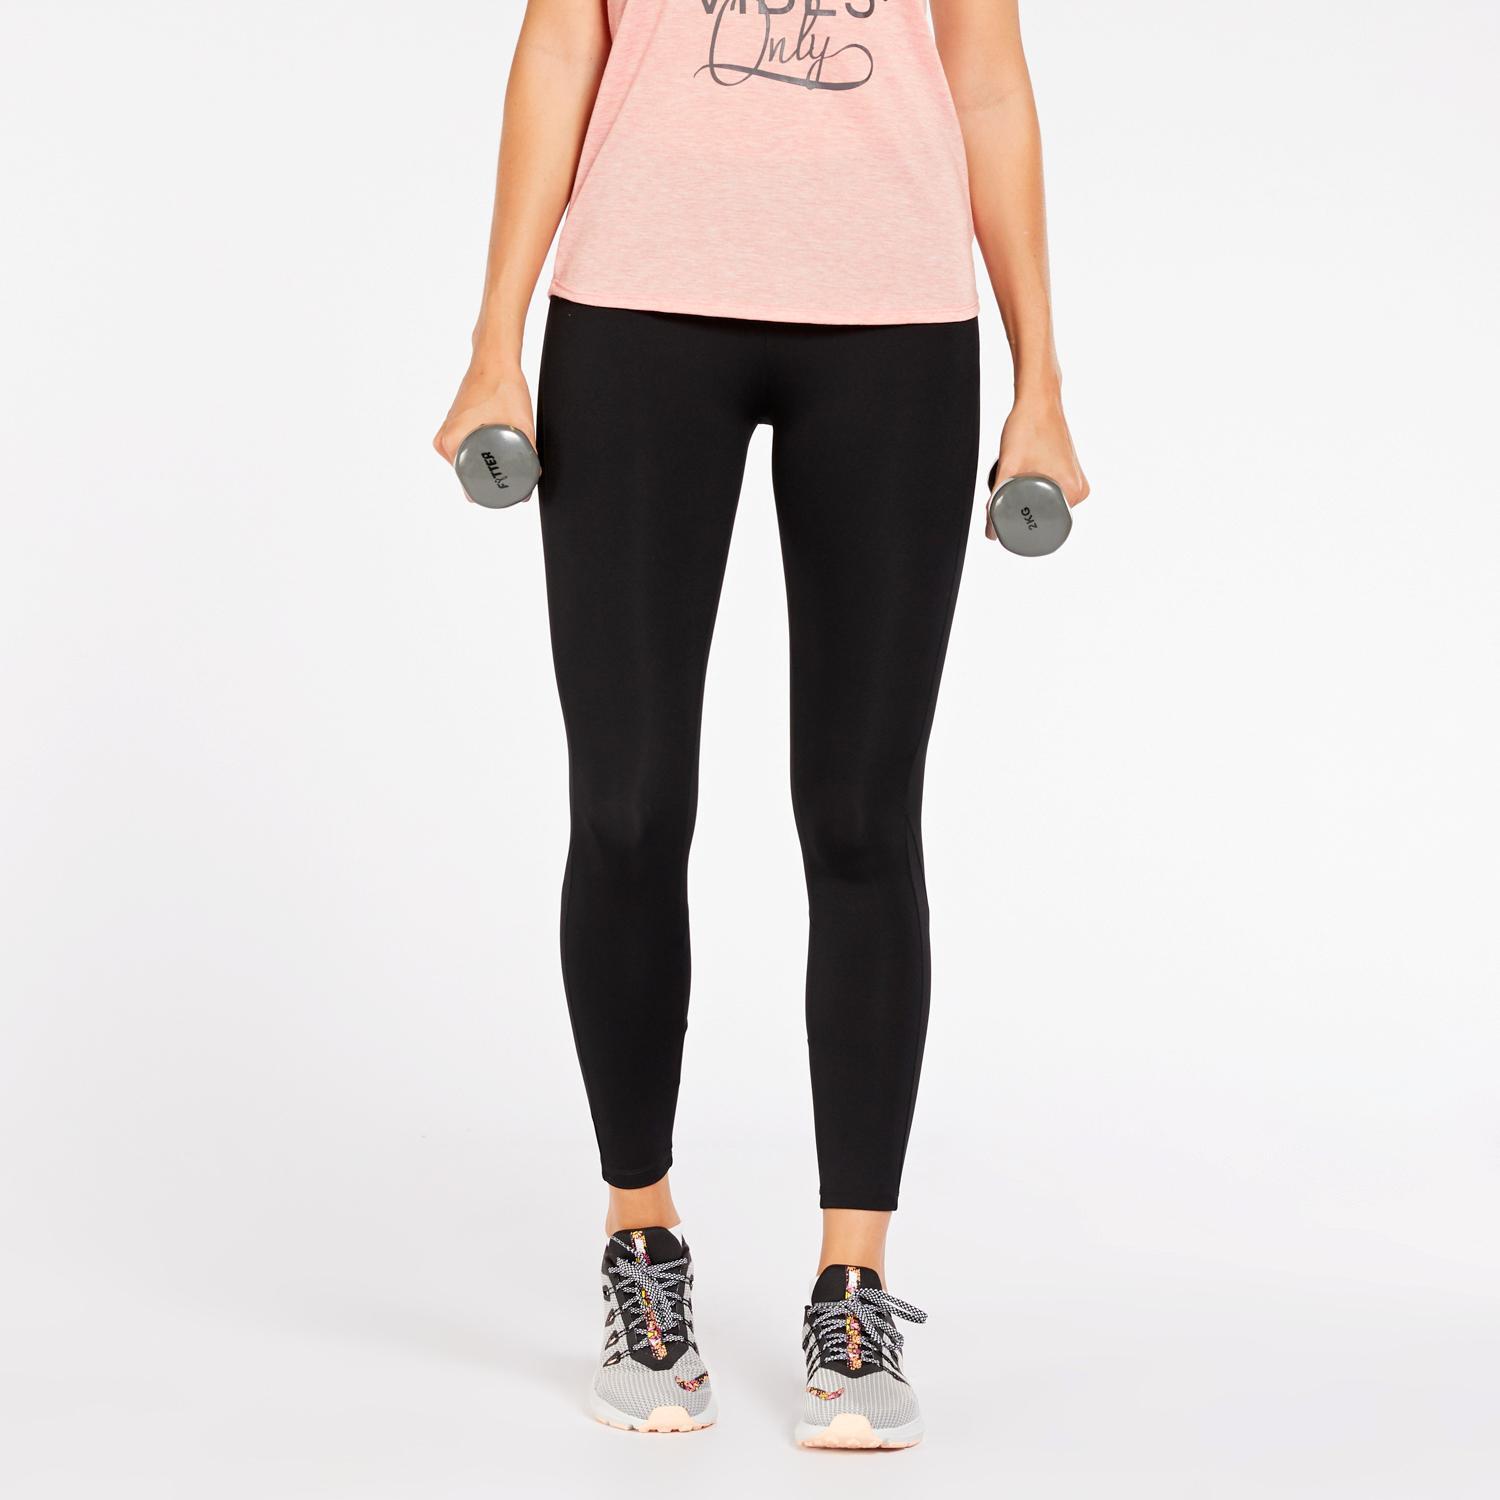 Doone Basic - Blanco - Camiseta Fitness Mujer, Sprinter